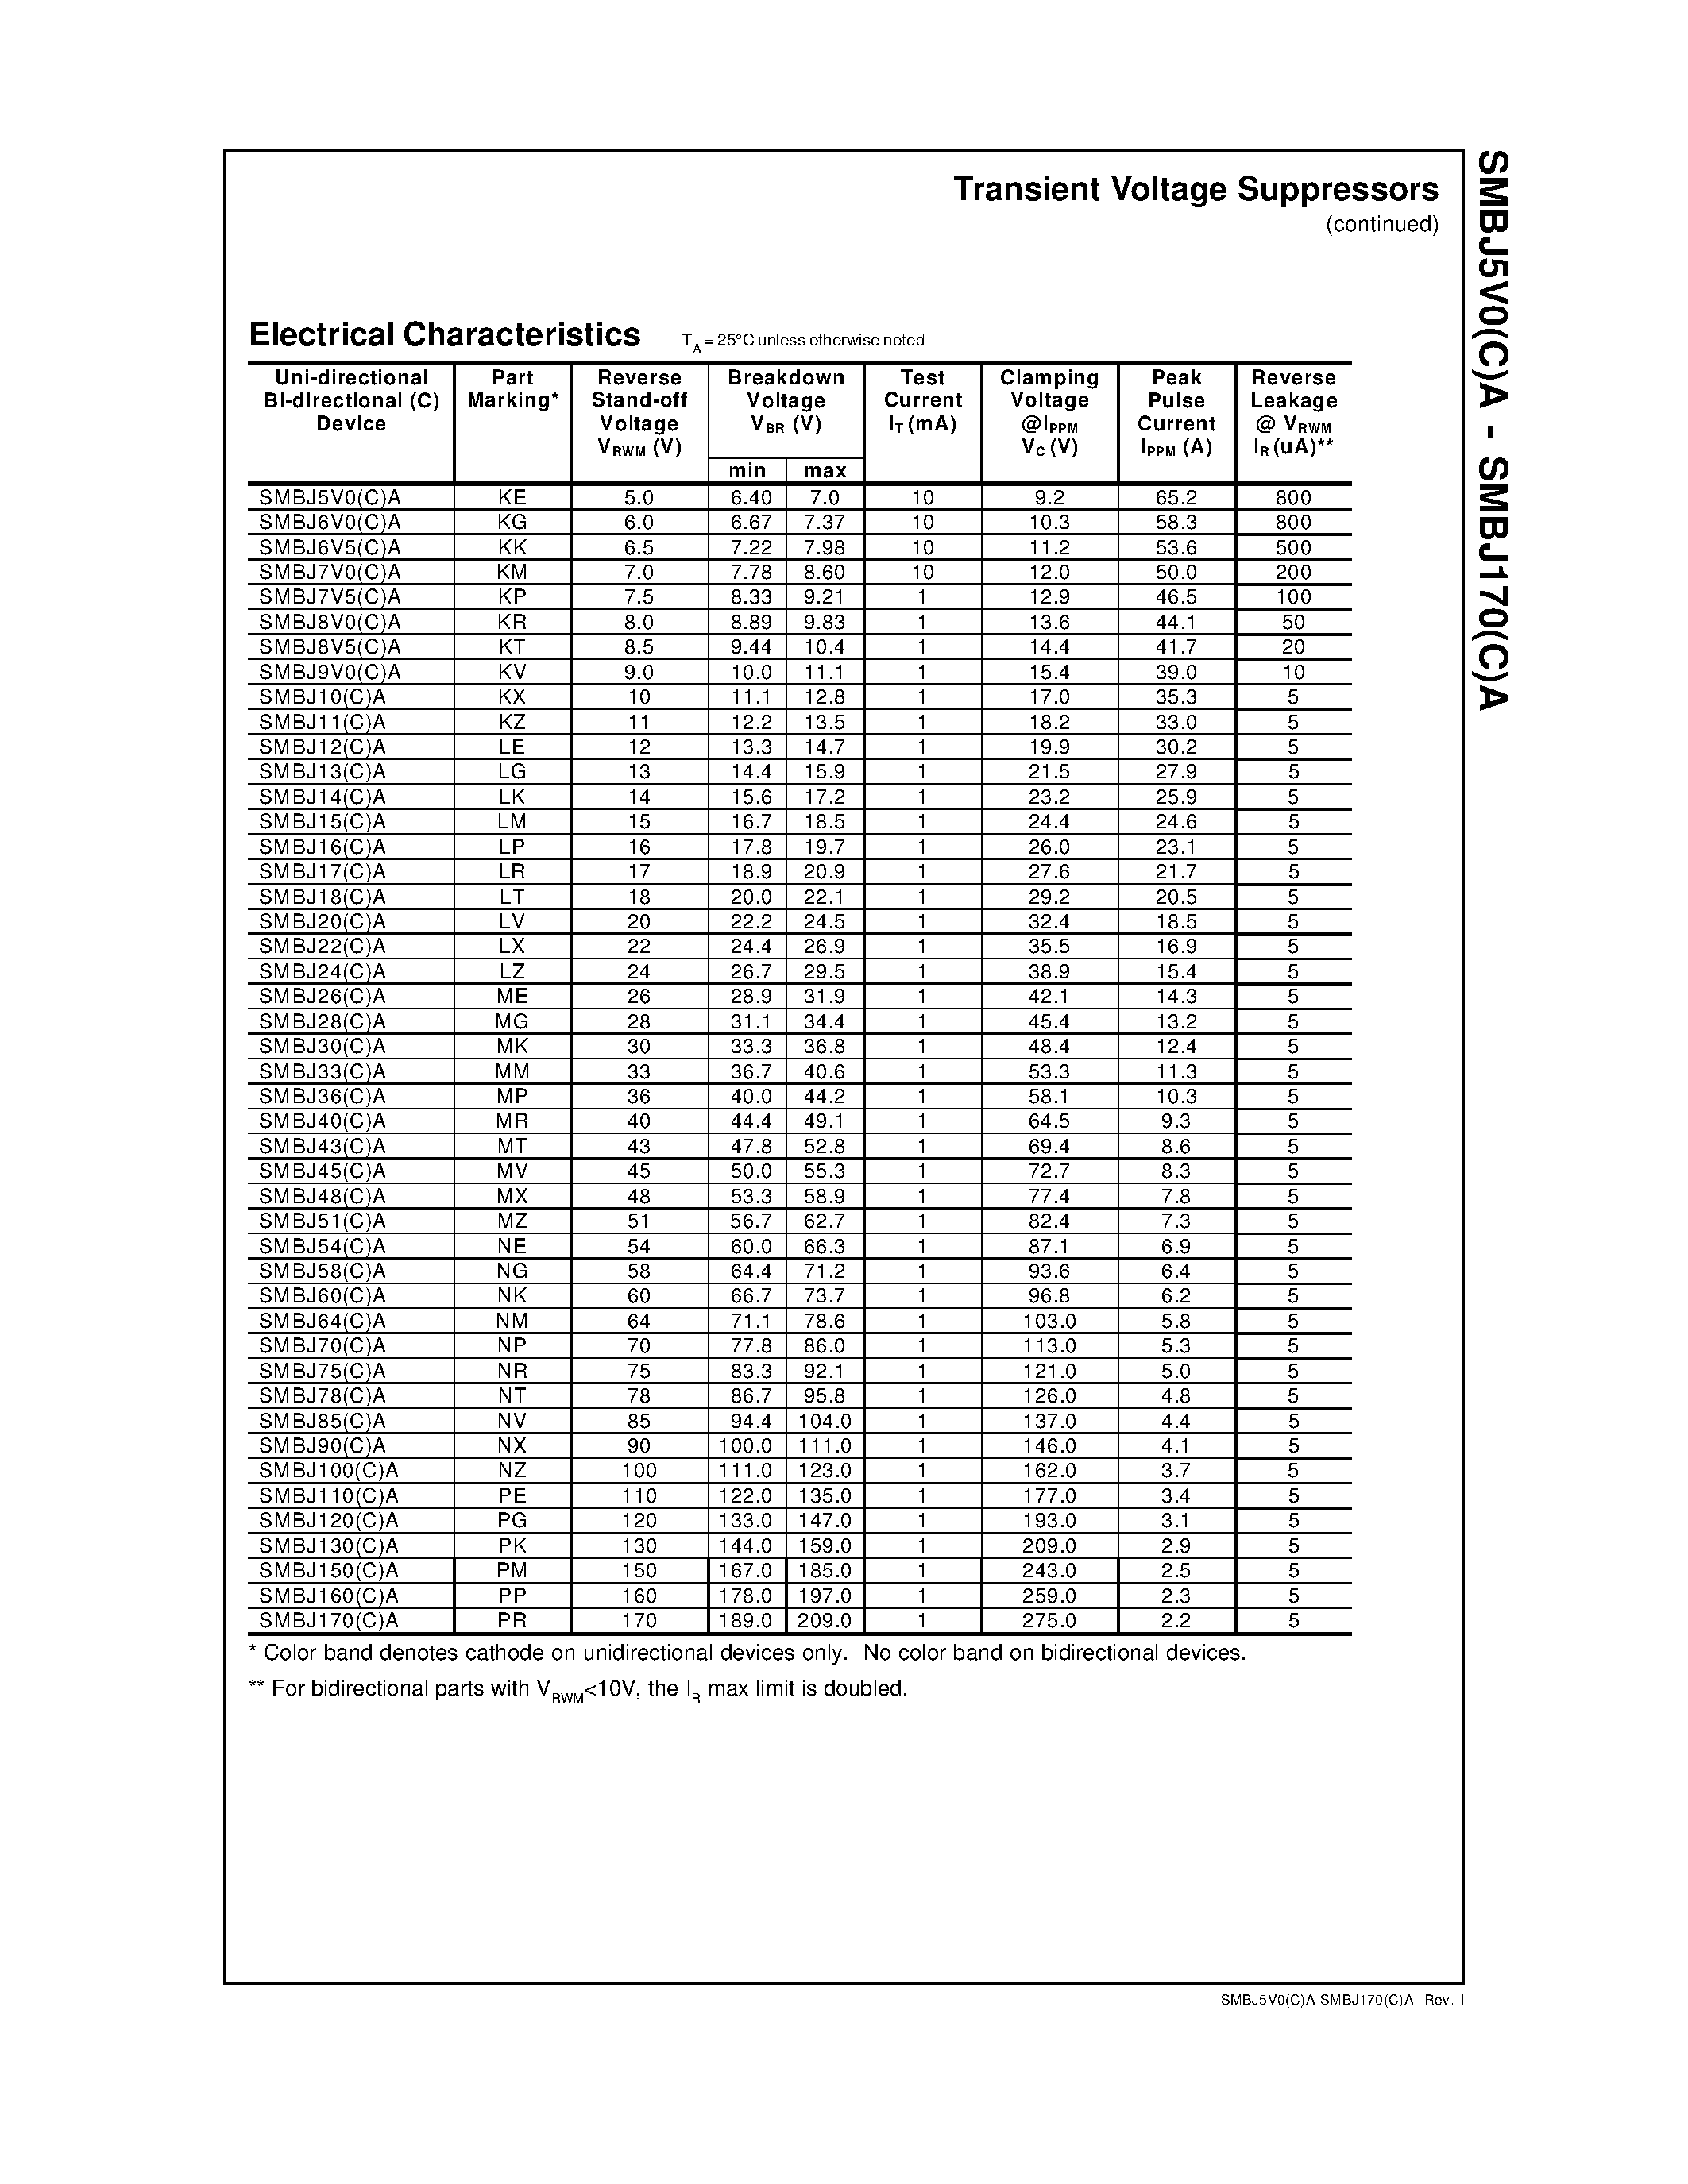 Datasheet SMBJ30A - Transient Voltage Suppressors SMBJ5V0(C)A - SMBJ170(C)A page 2